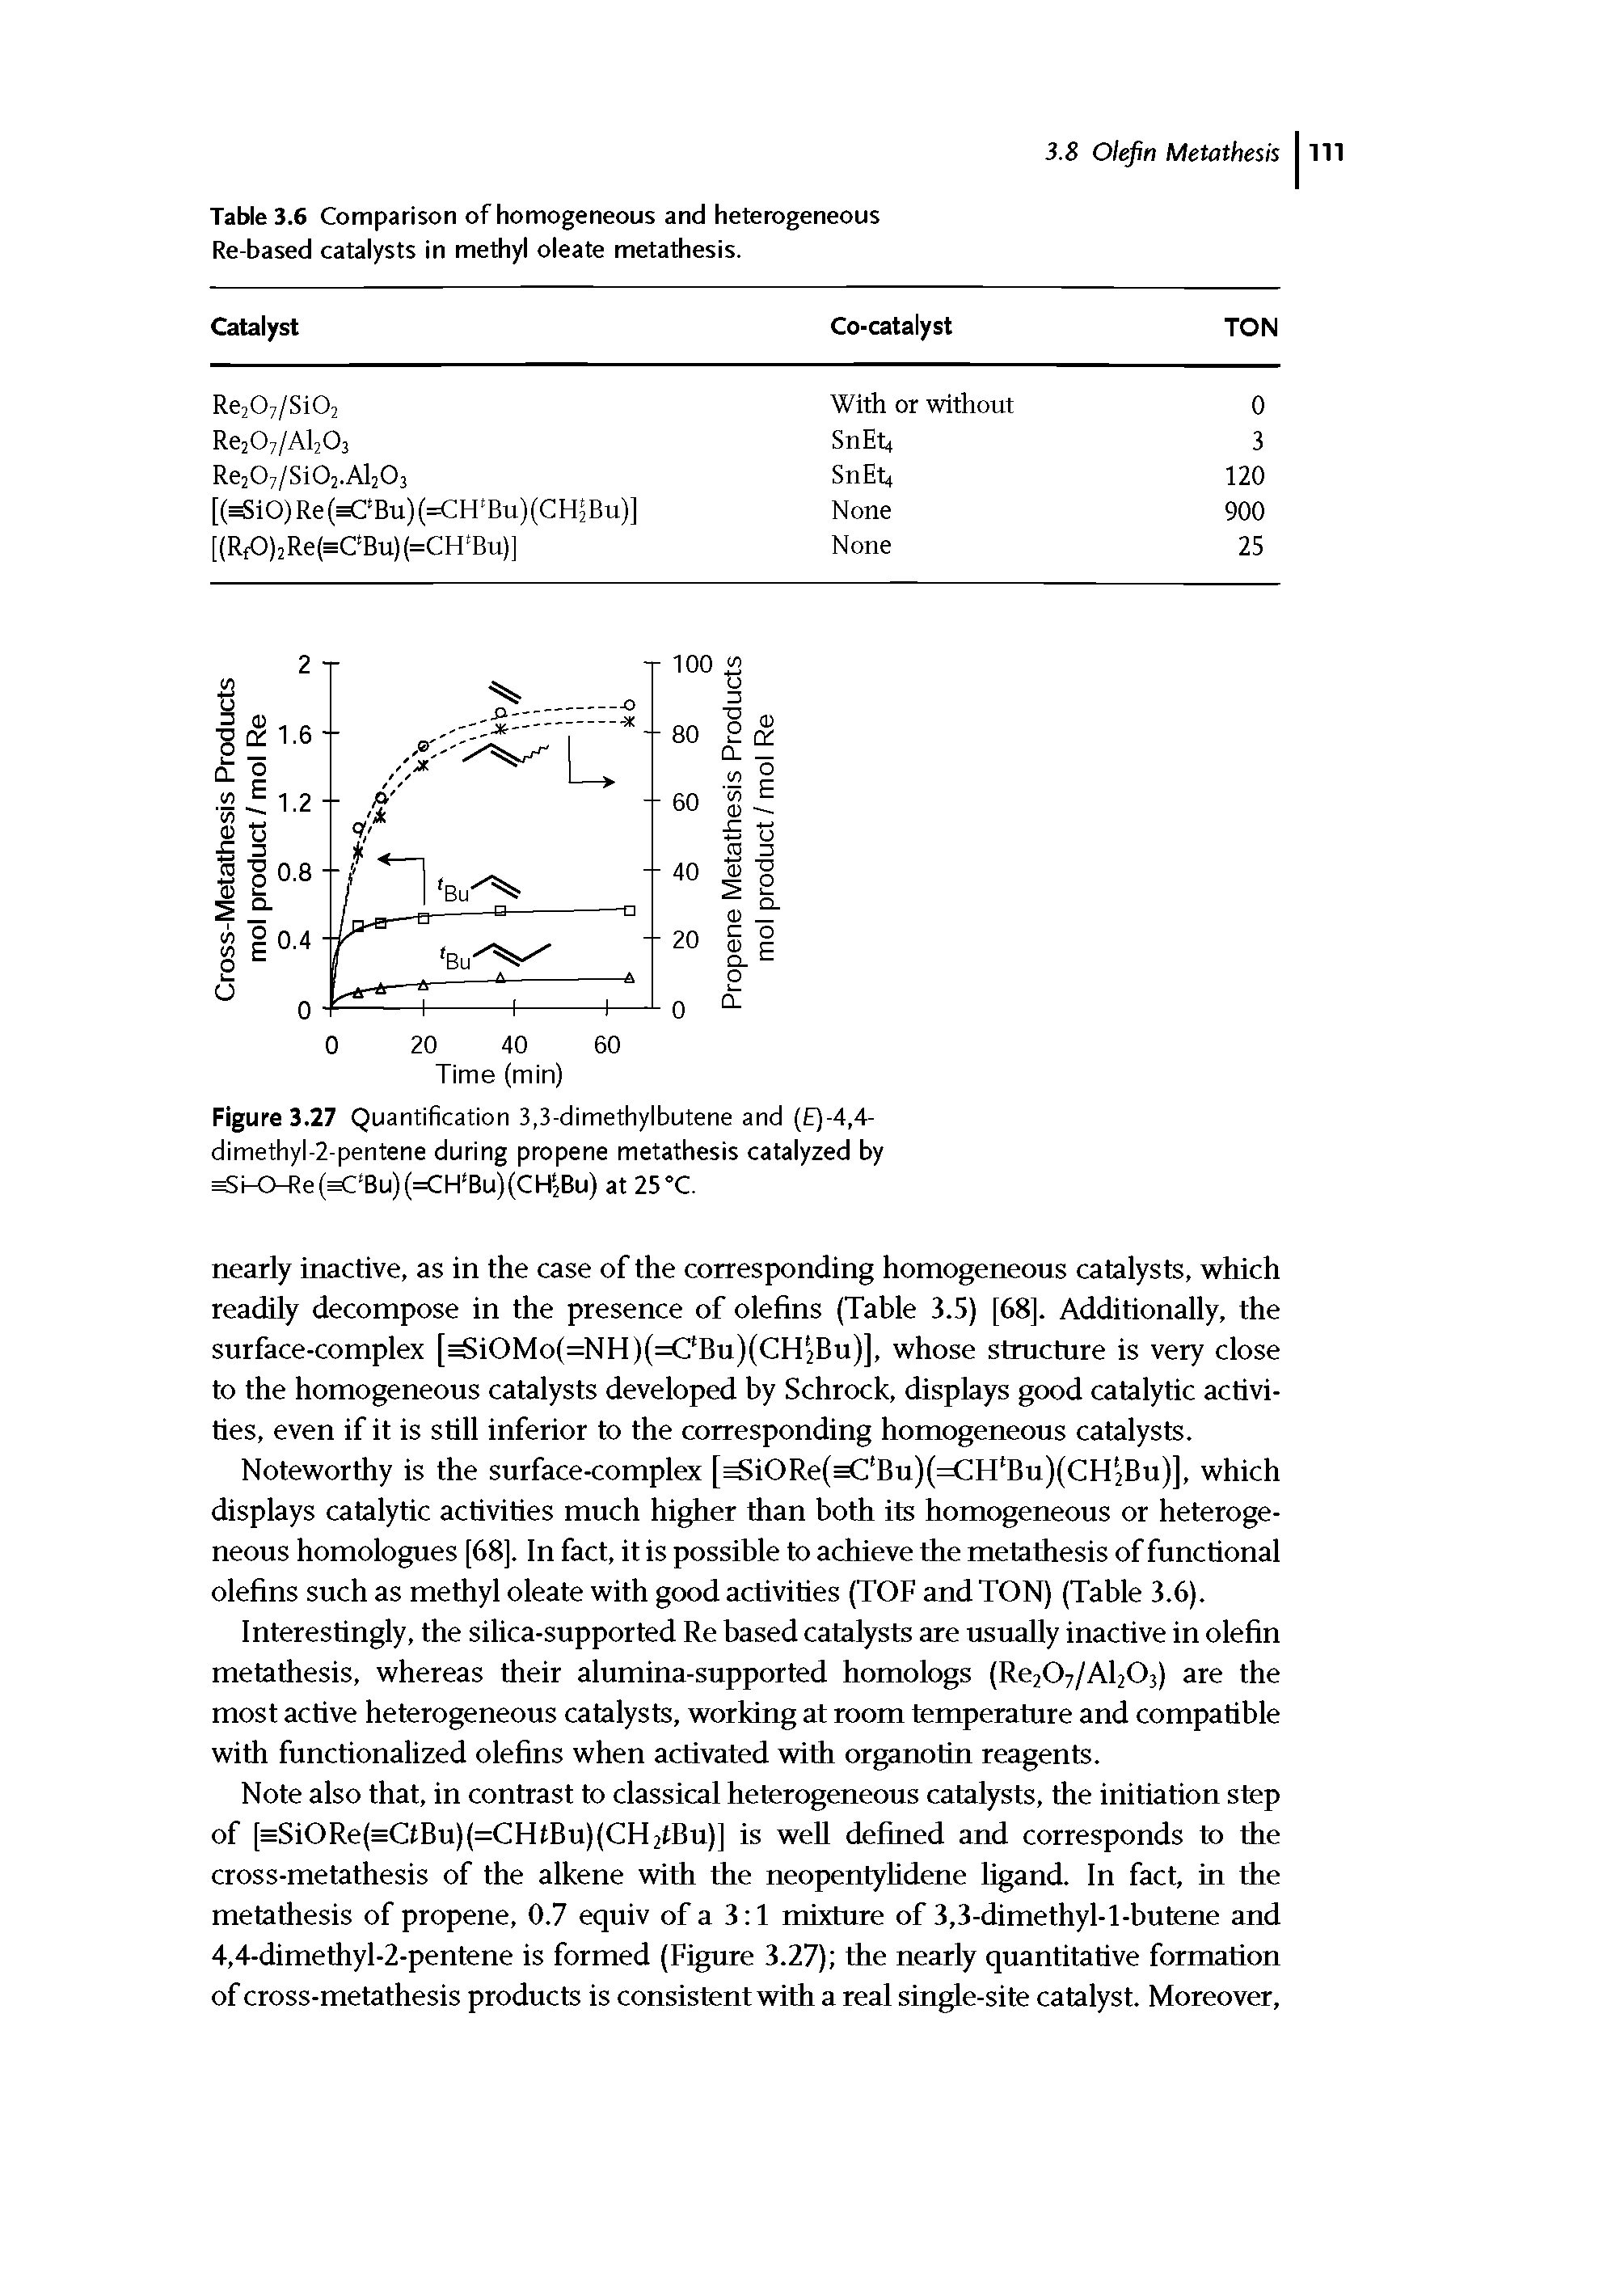 Figure 3.27 Quantification 3,3-dimethylbutene and ( )-4,4-dimethyl-2-pentene during propene metathesis catalyzed by i-0-Re( Bu)(=CH Bu)(CH 2Bu) at 25 C.